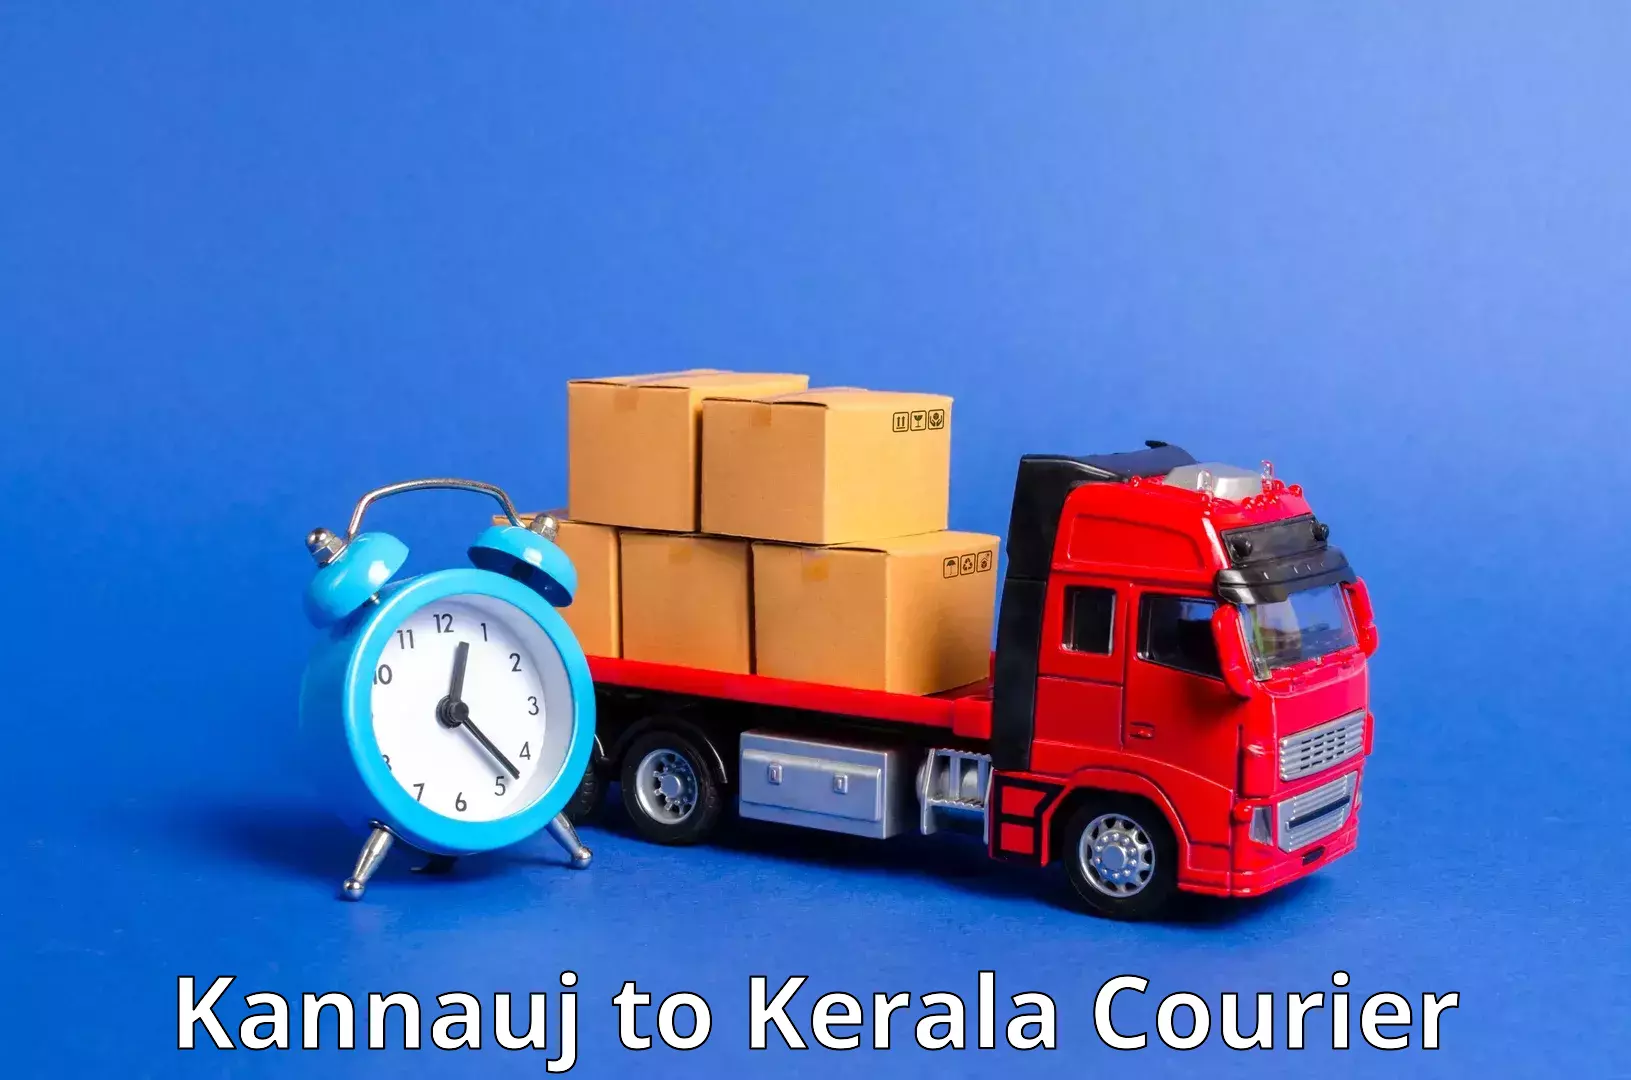 High-speed parcel service Kannauj to Kerala